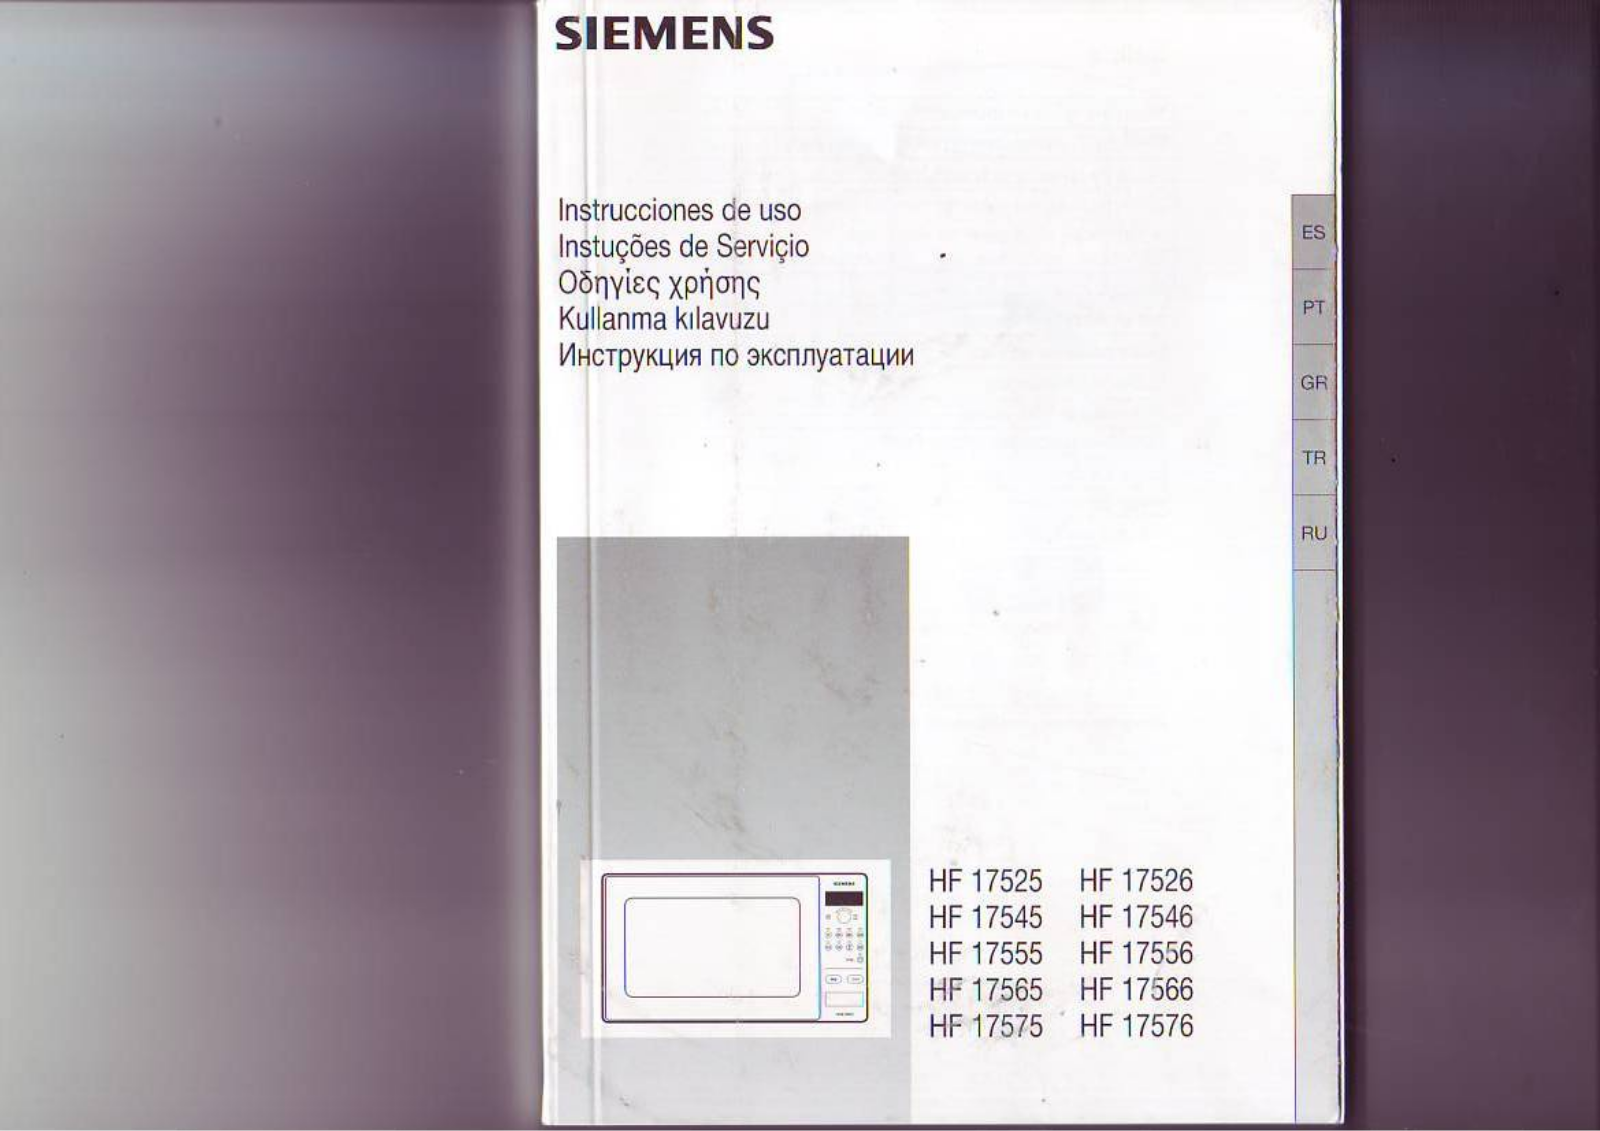 Siemens HF 17556 EU User Manual